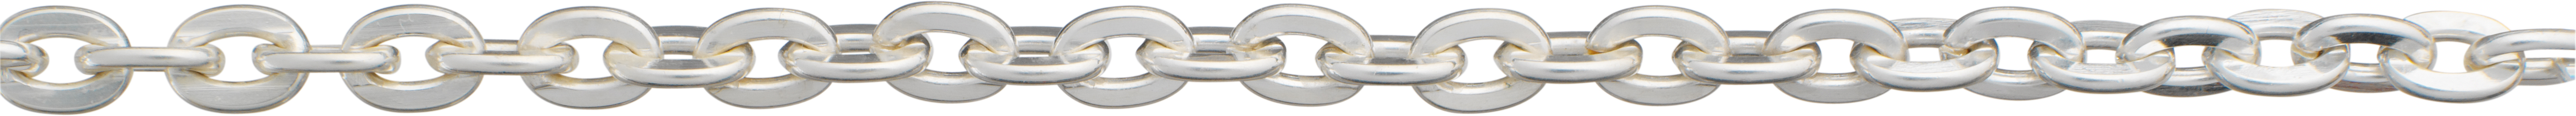 ankerketting plat gewalst zilver 925/- 4,40mm, draad dikte 1,00mm